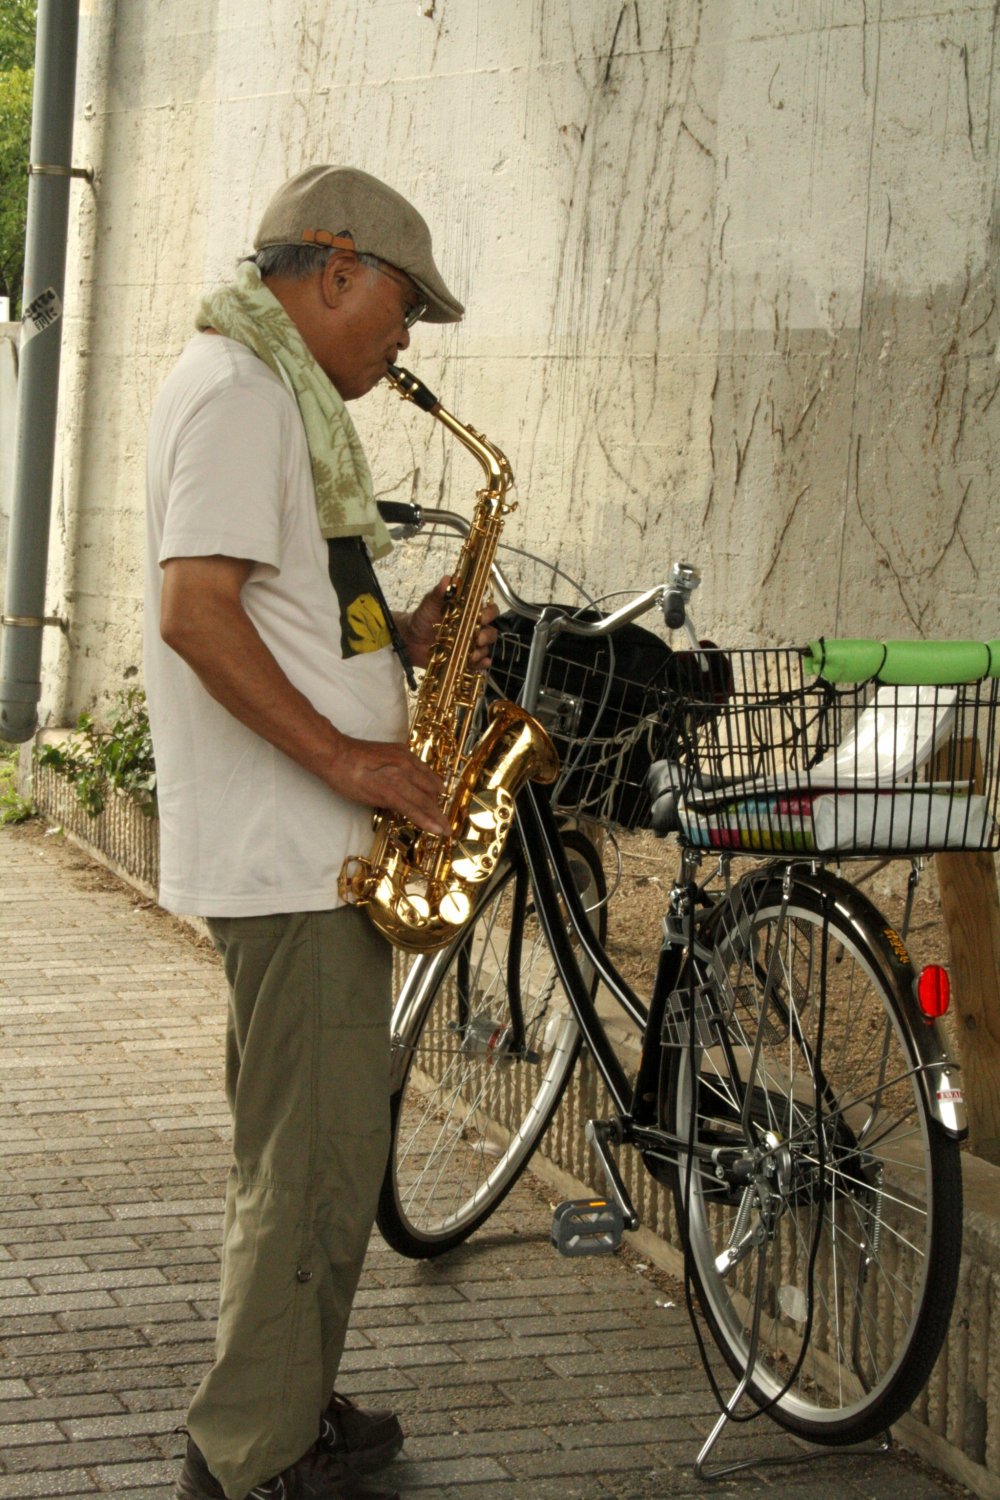 A busker&nbsp;performing on his saxophone near Toji Shrine